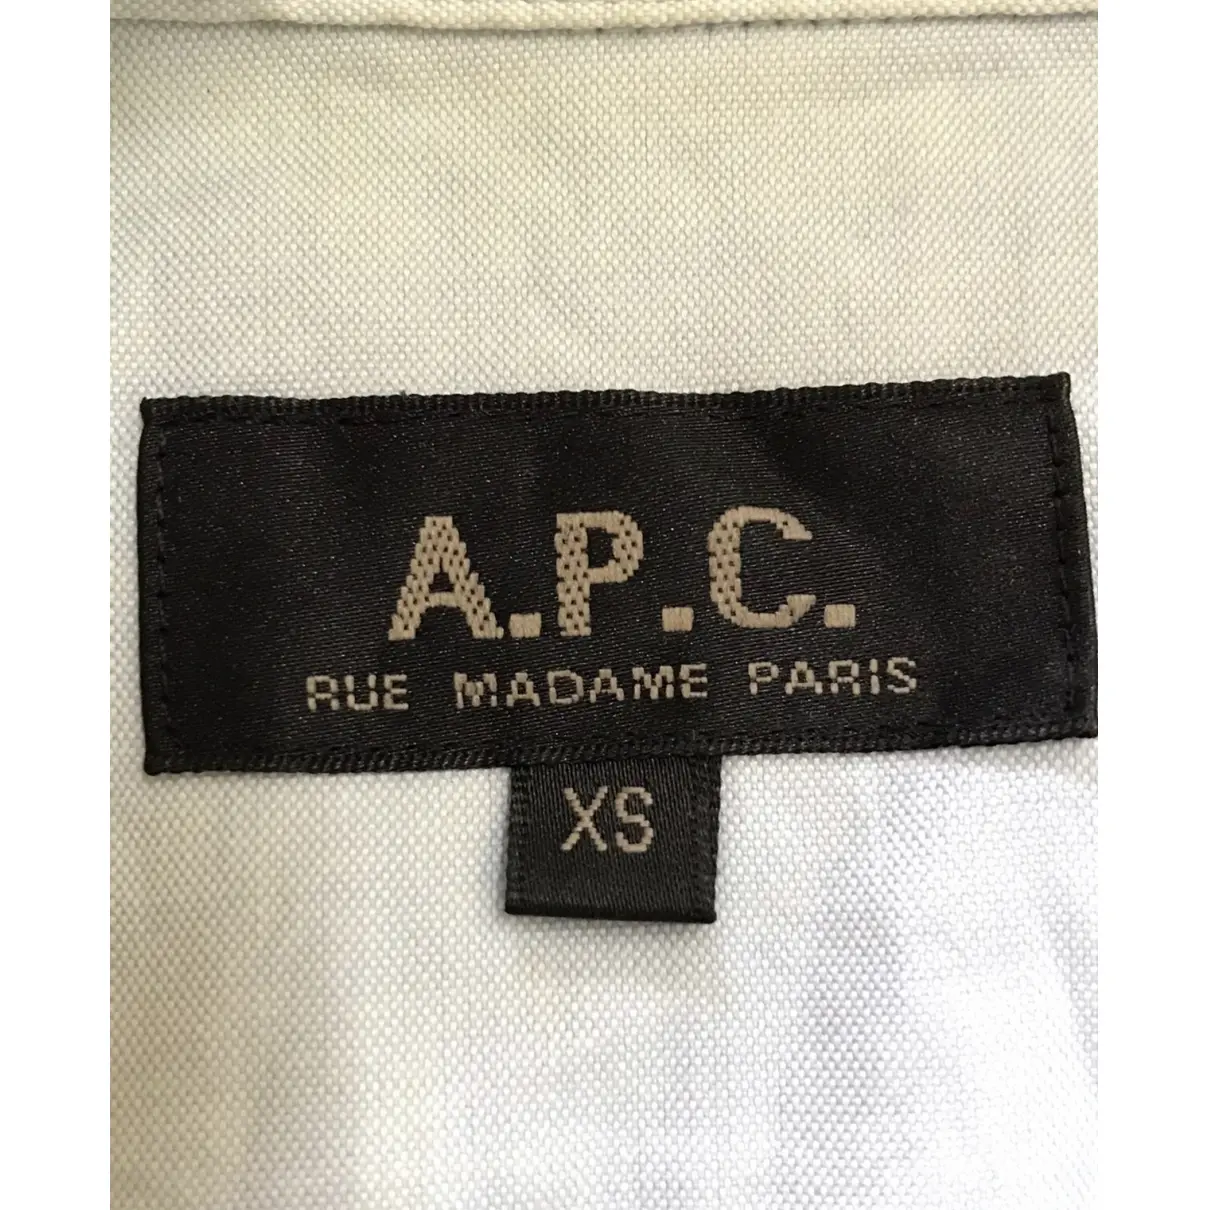 Buy APC Shirt online